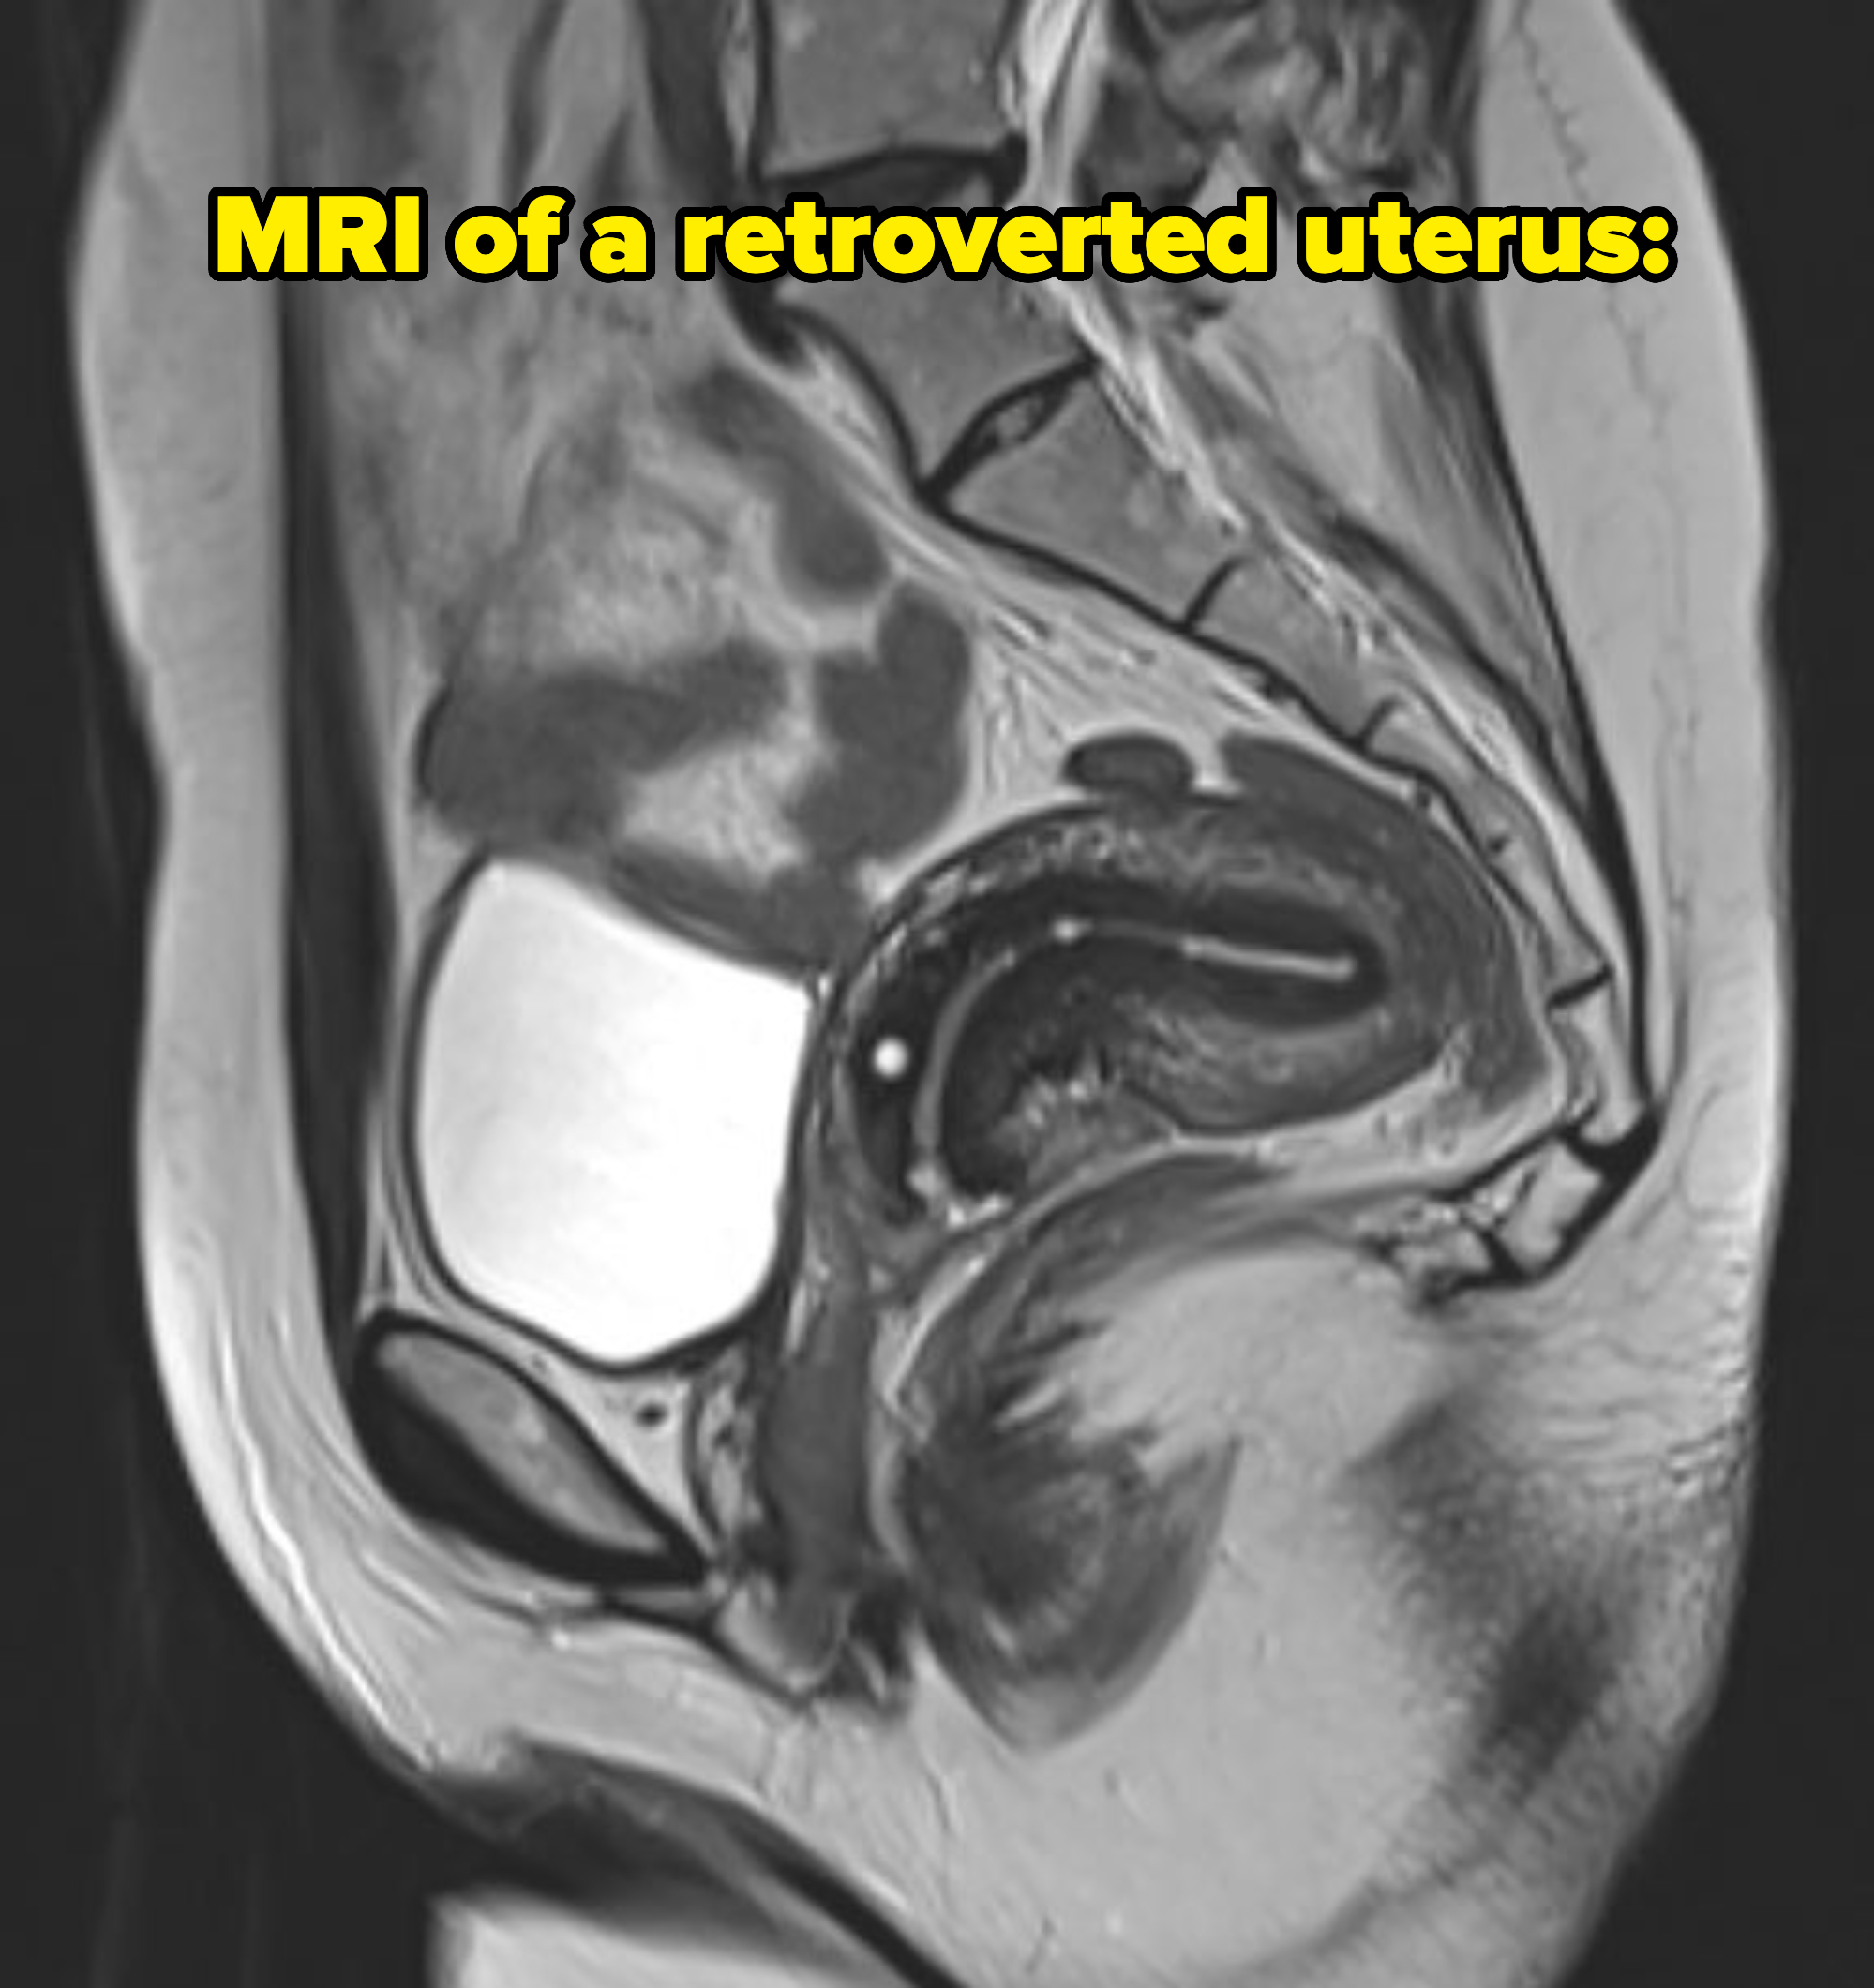 An MRI of a retroverted uterus